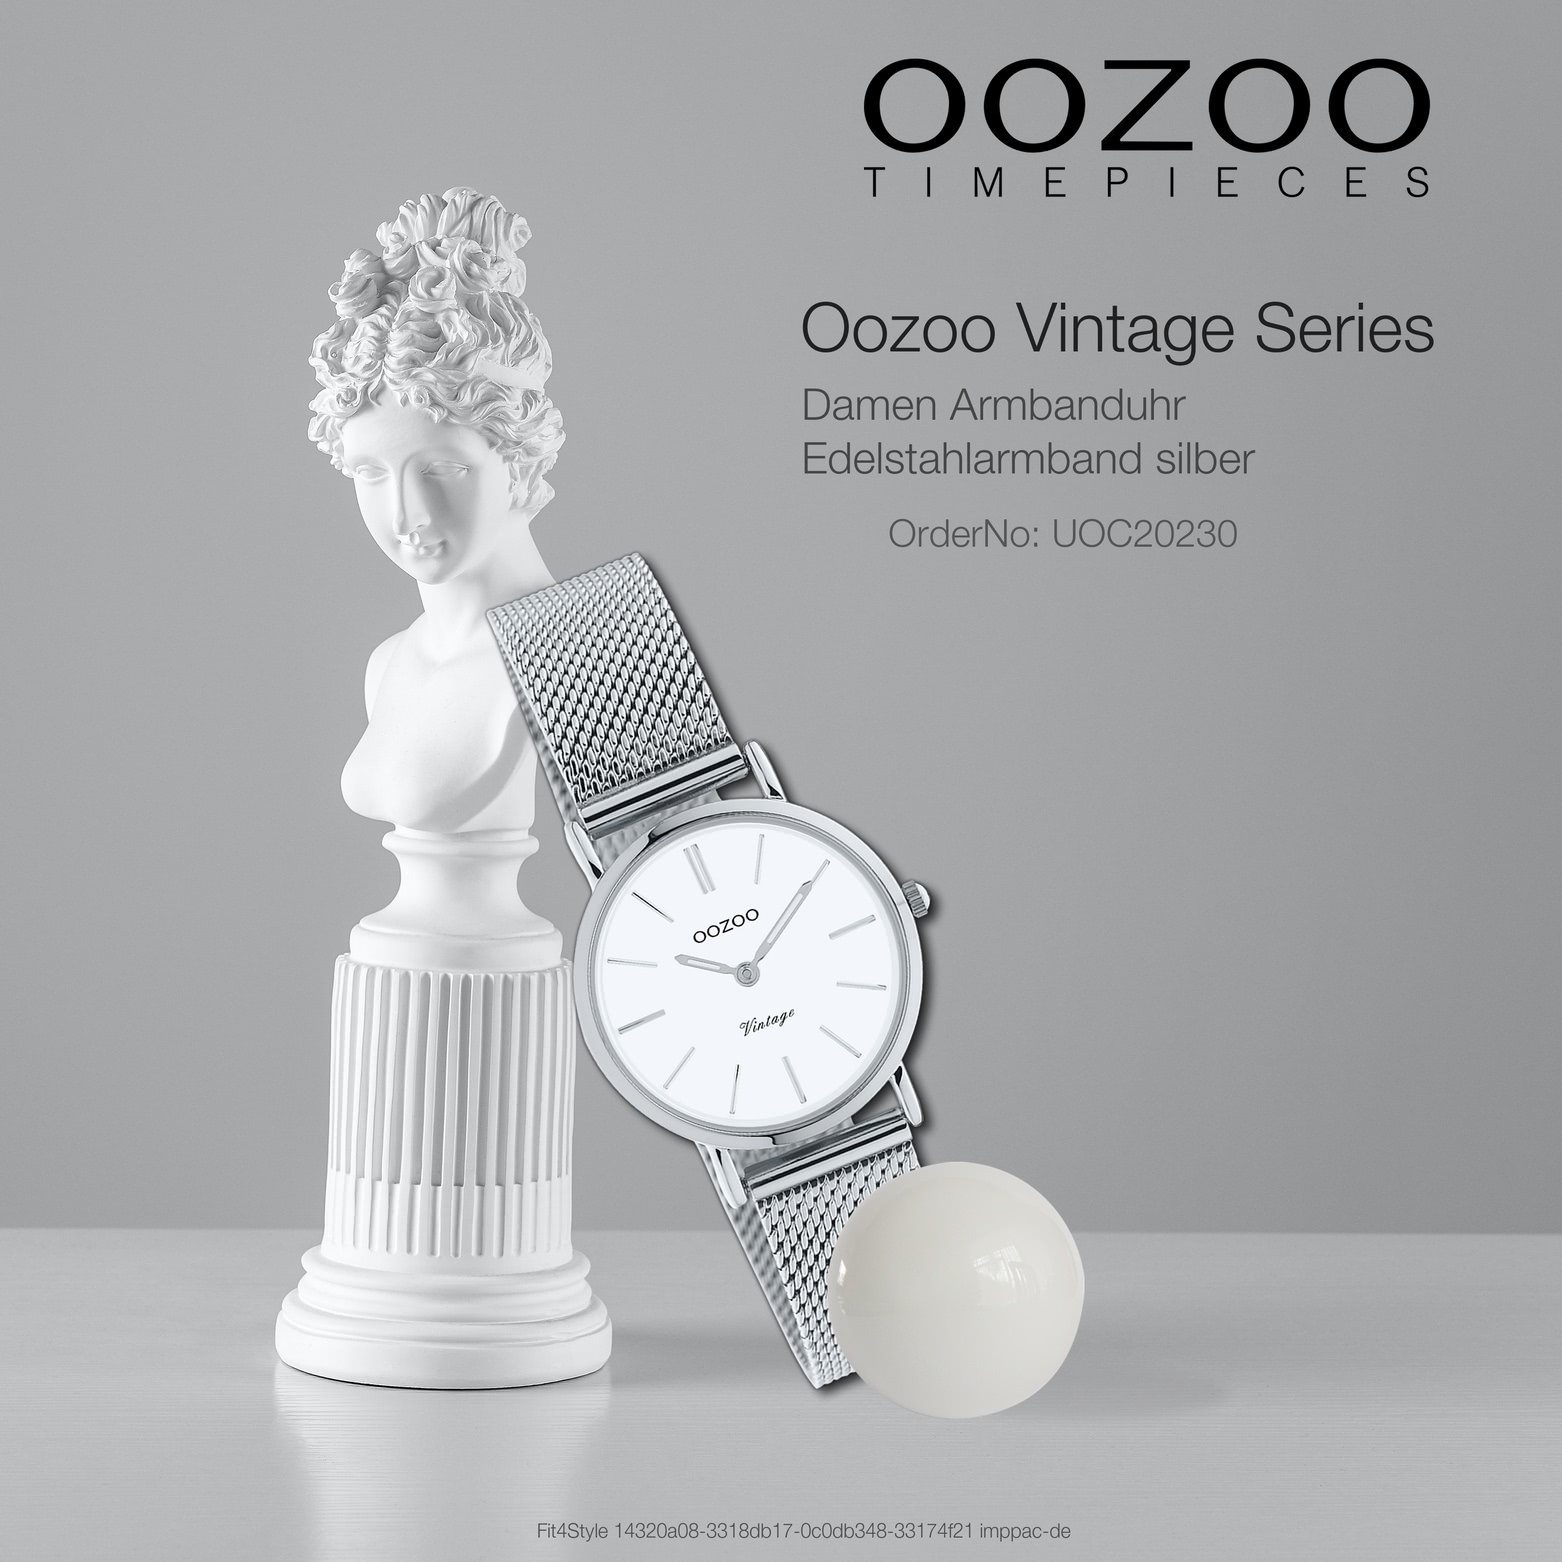 Armbanduhr OOZOO klein (ca 28mm) Edelstahlarmband, Quarzuhr Elegant-Style Analog, silber rund, Herrenuhr Unisex Damen, Oozoo